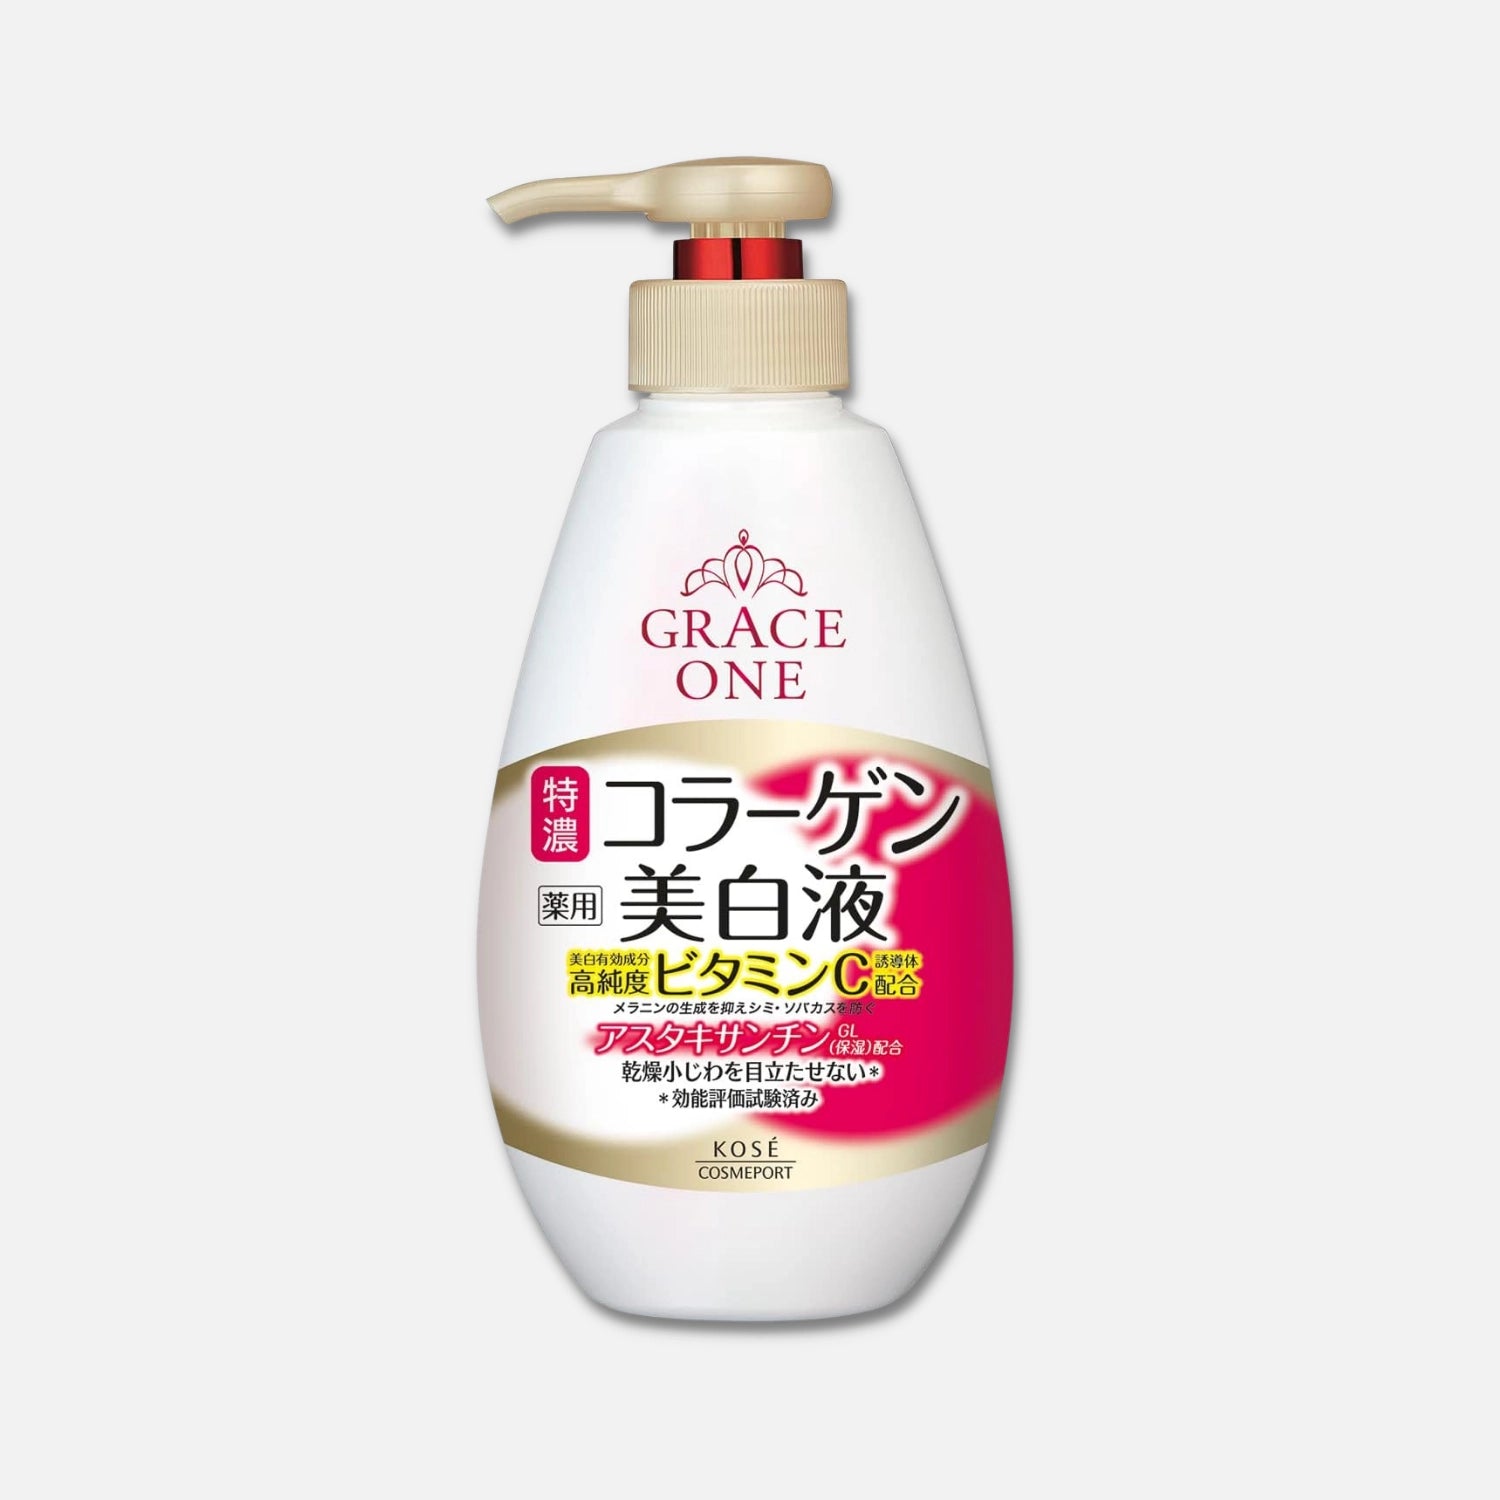 Kose Grace One Whitening Perfect Milk 230ml - Buy Me Japan